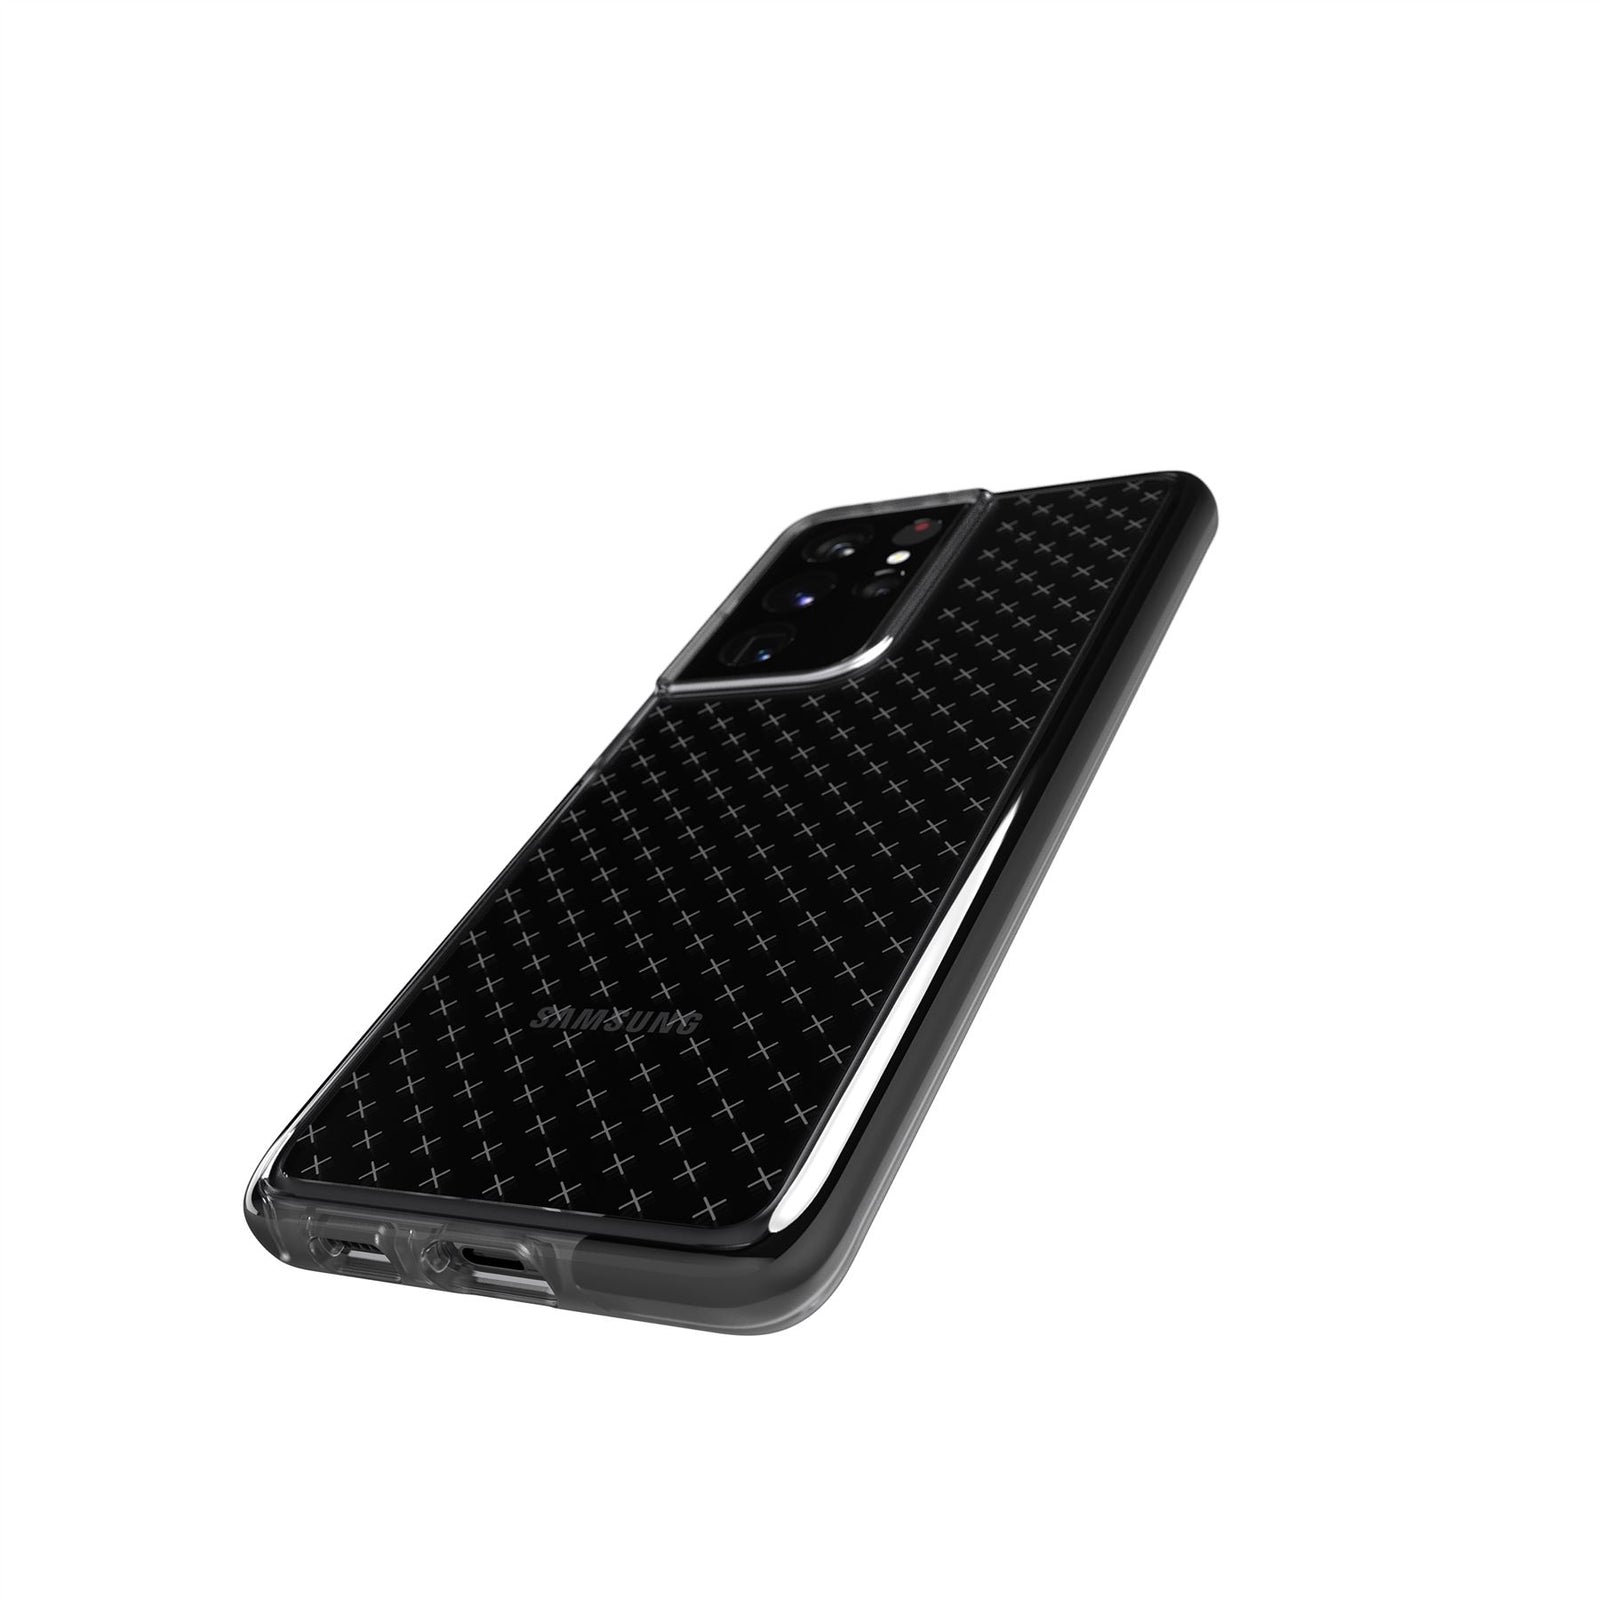 Evo Check - Samsung Galaxy S21 Ultra 5G Case - Smokey Black